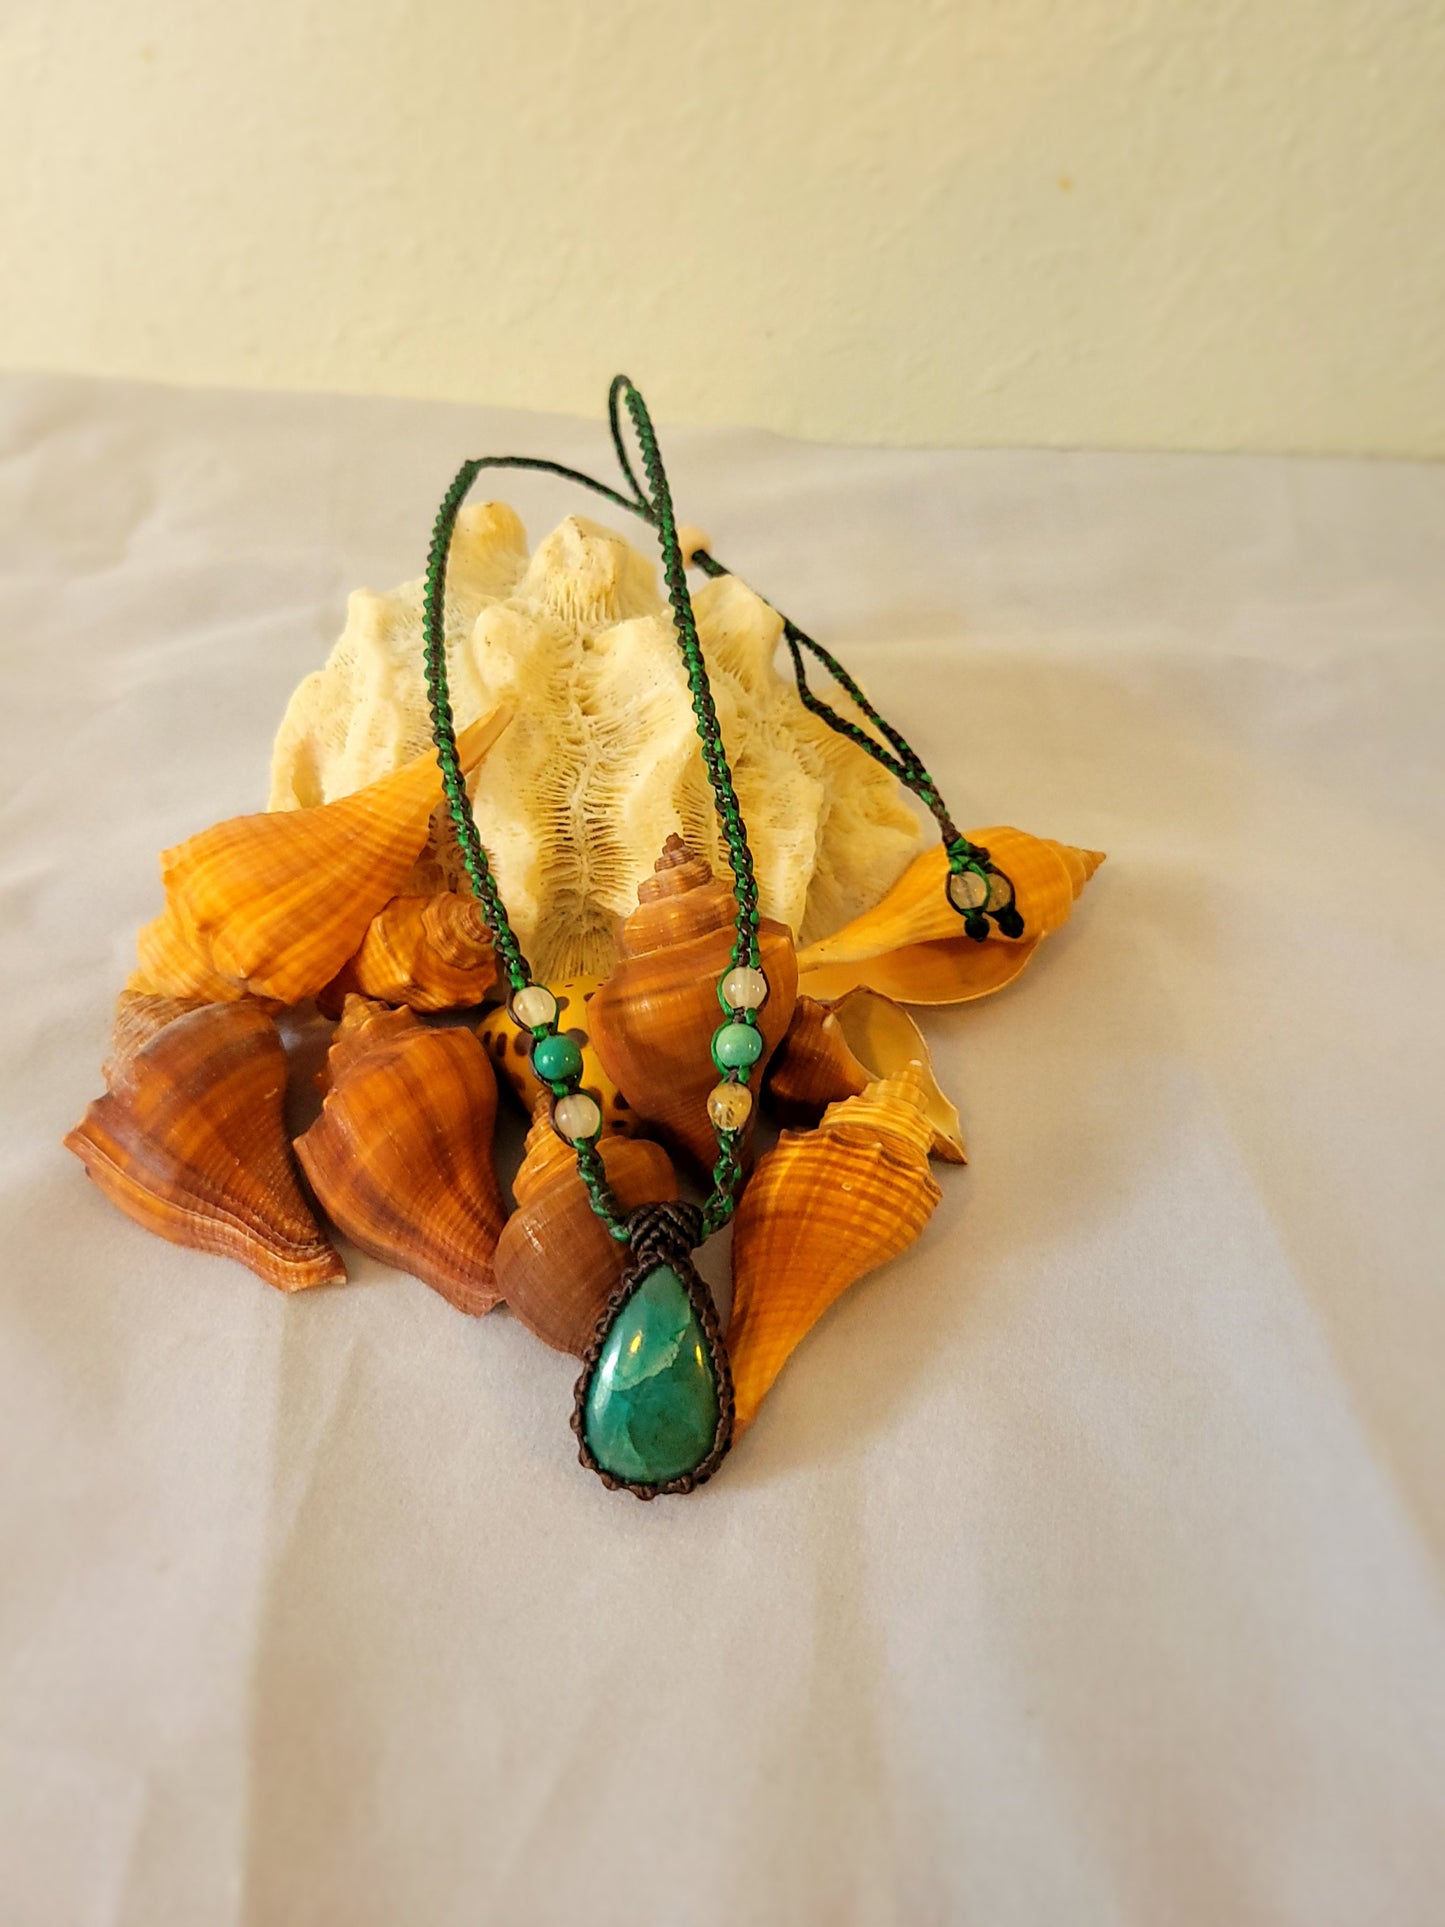 Elegant Green Chrysocolla Stone Pendant - Micromacrame Artistry with Quartz Beads